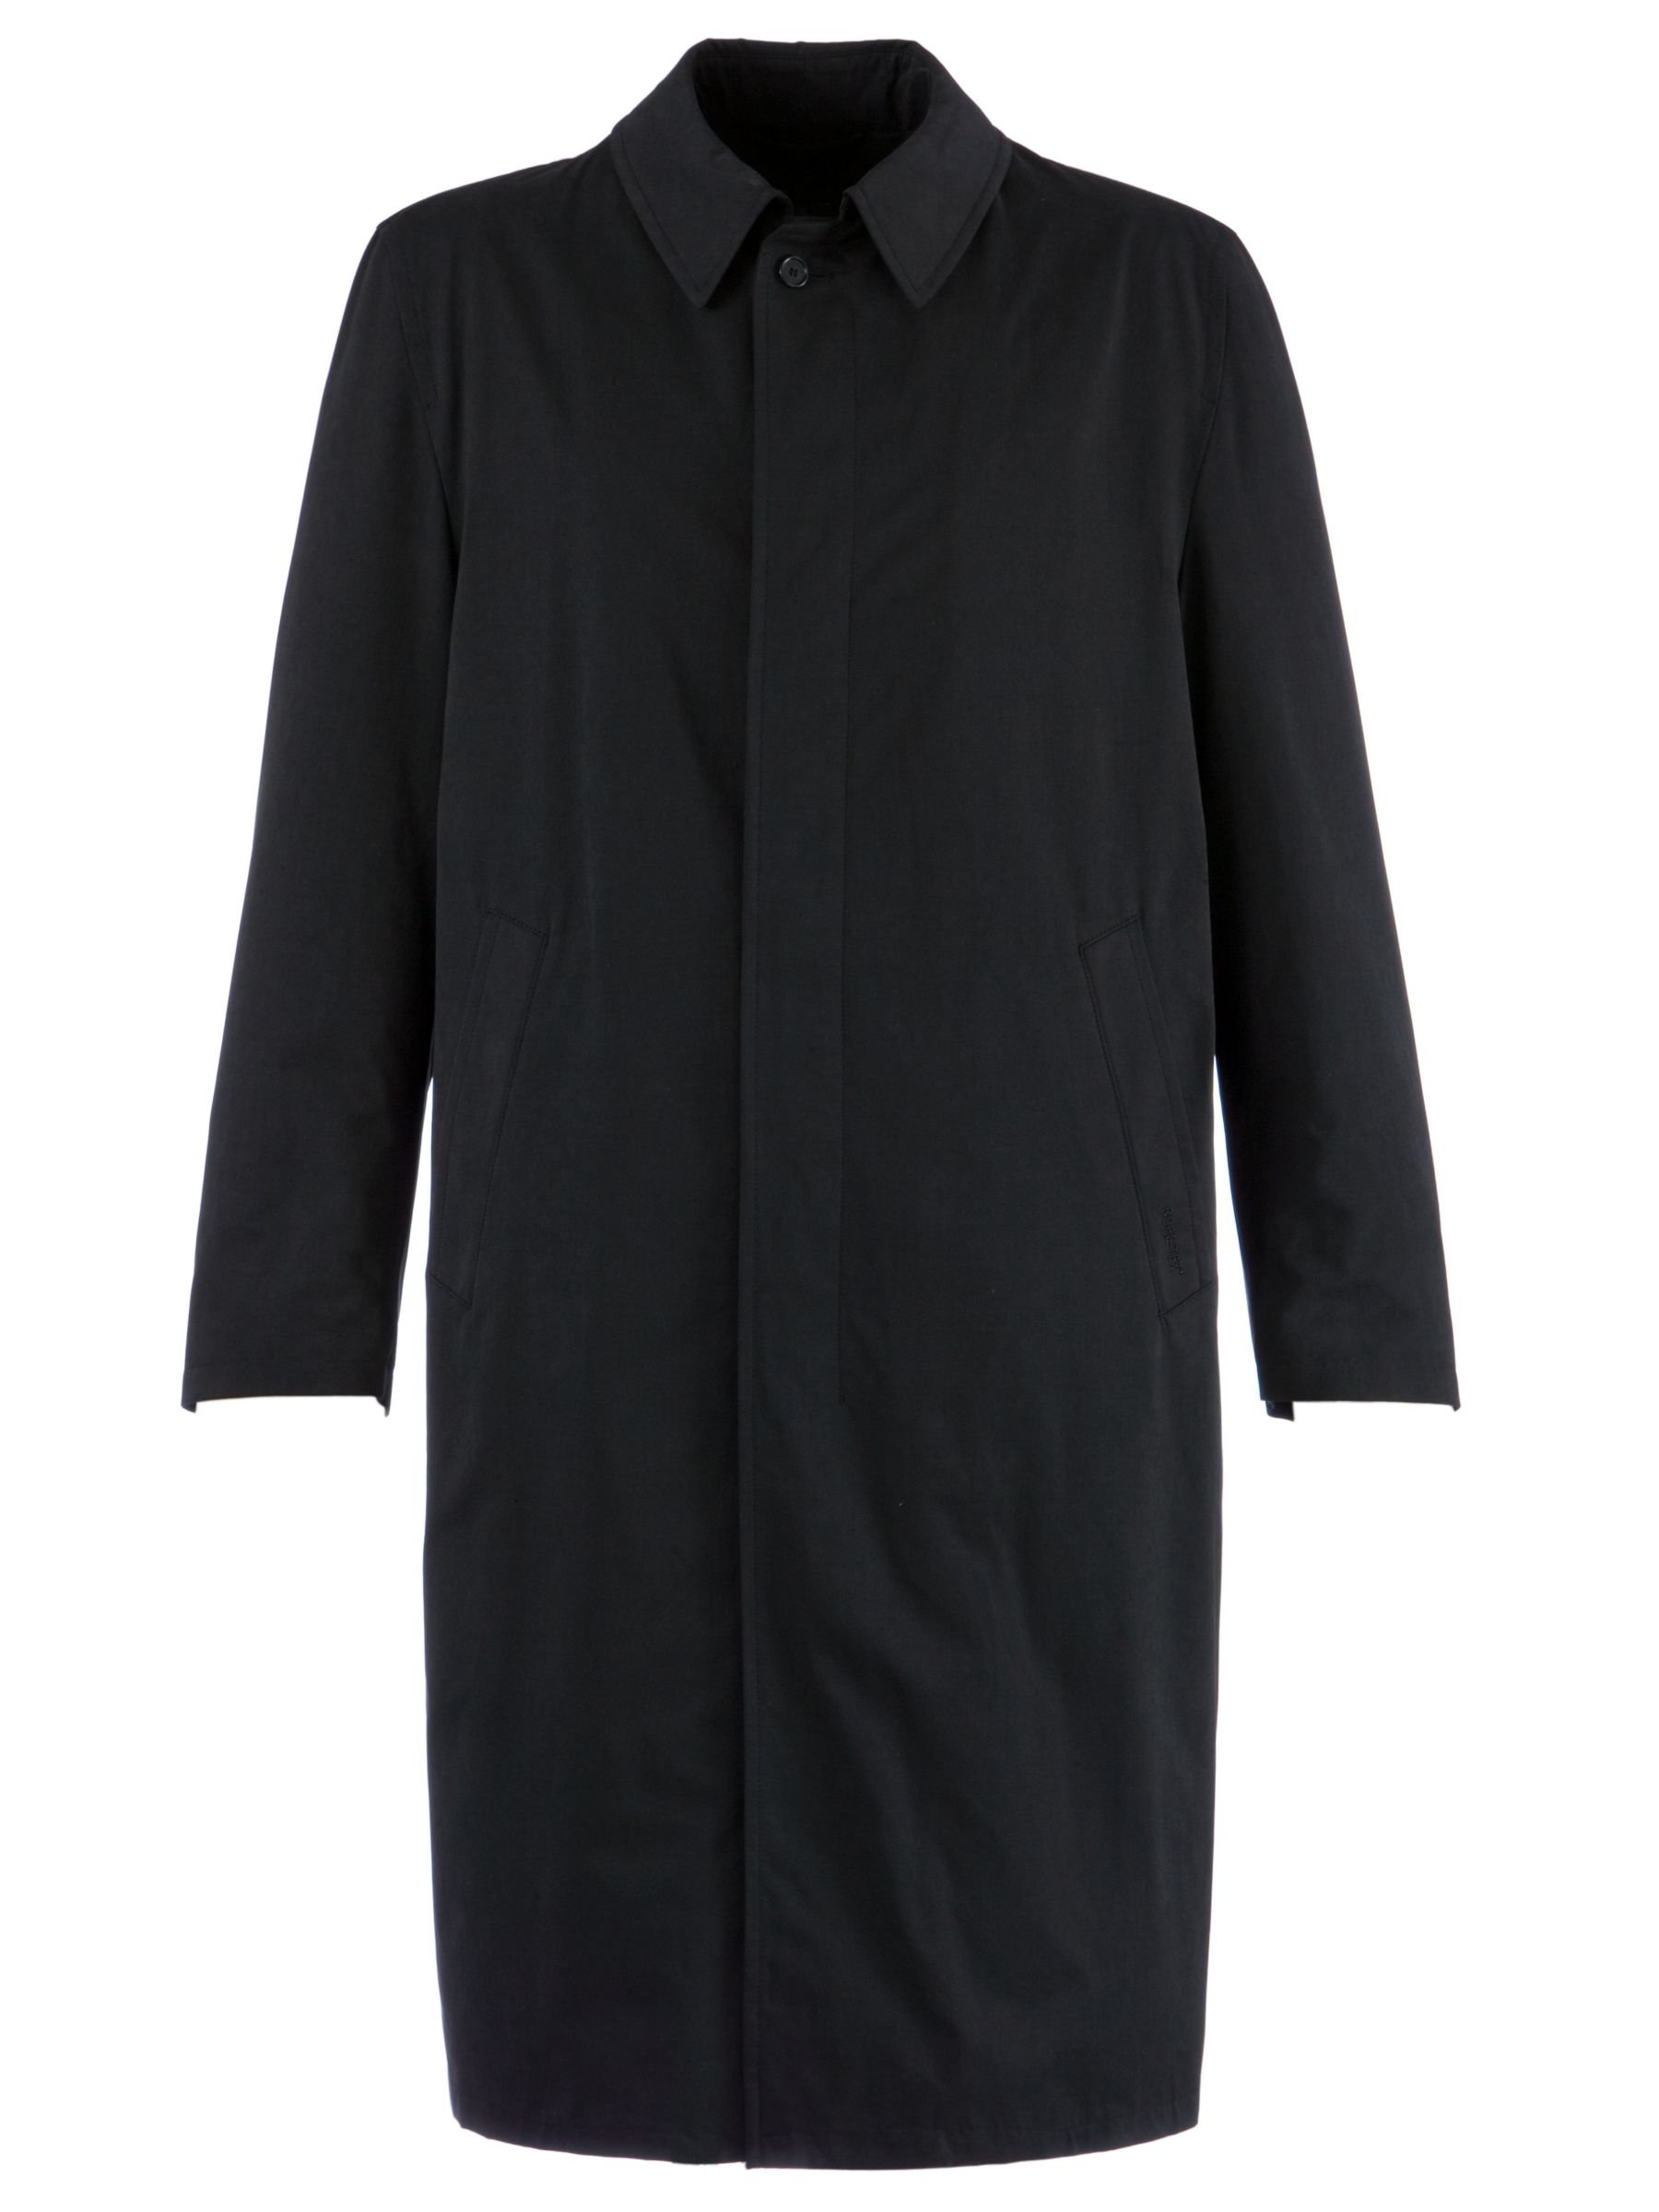 Bugatti Goretex Placket Raincoat, Black at John Lewis